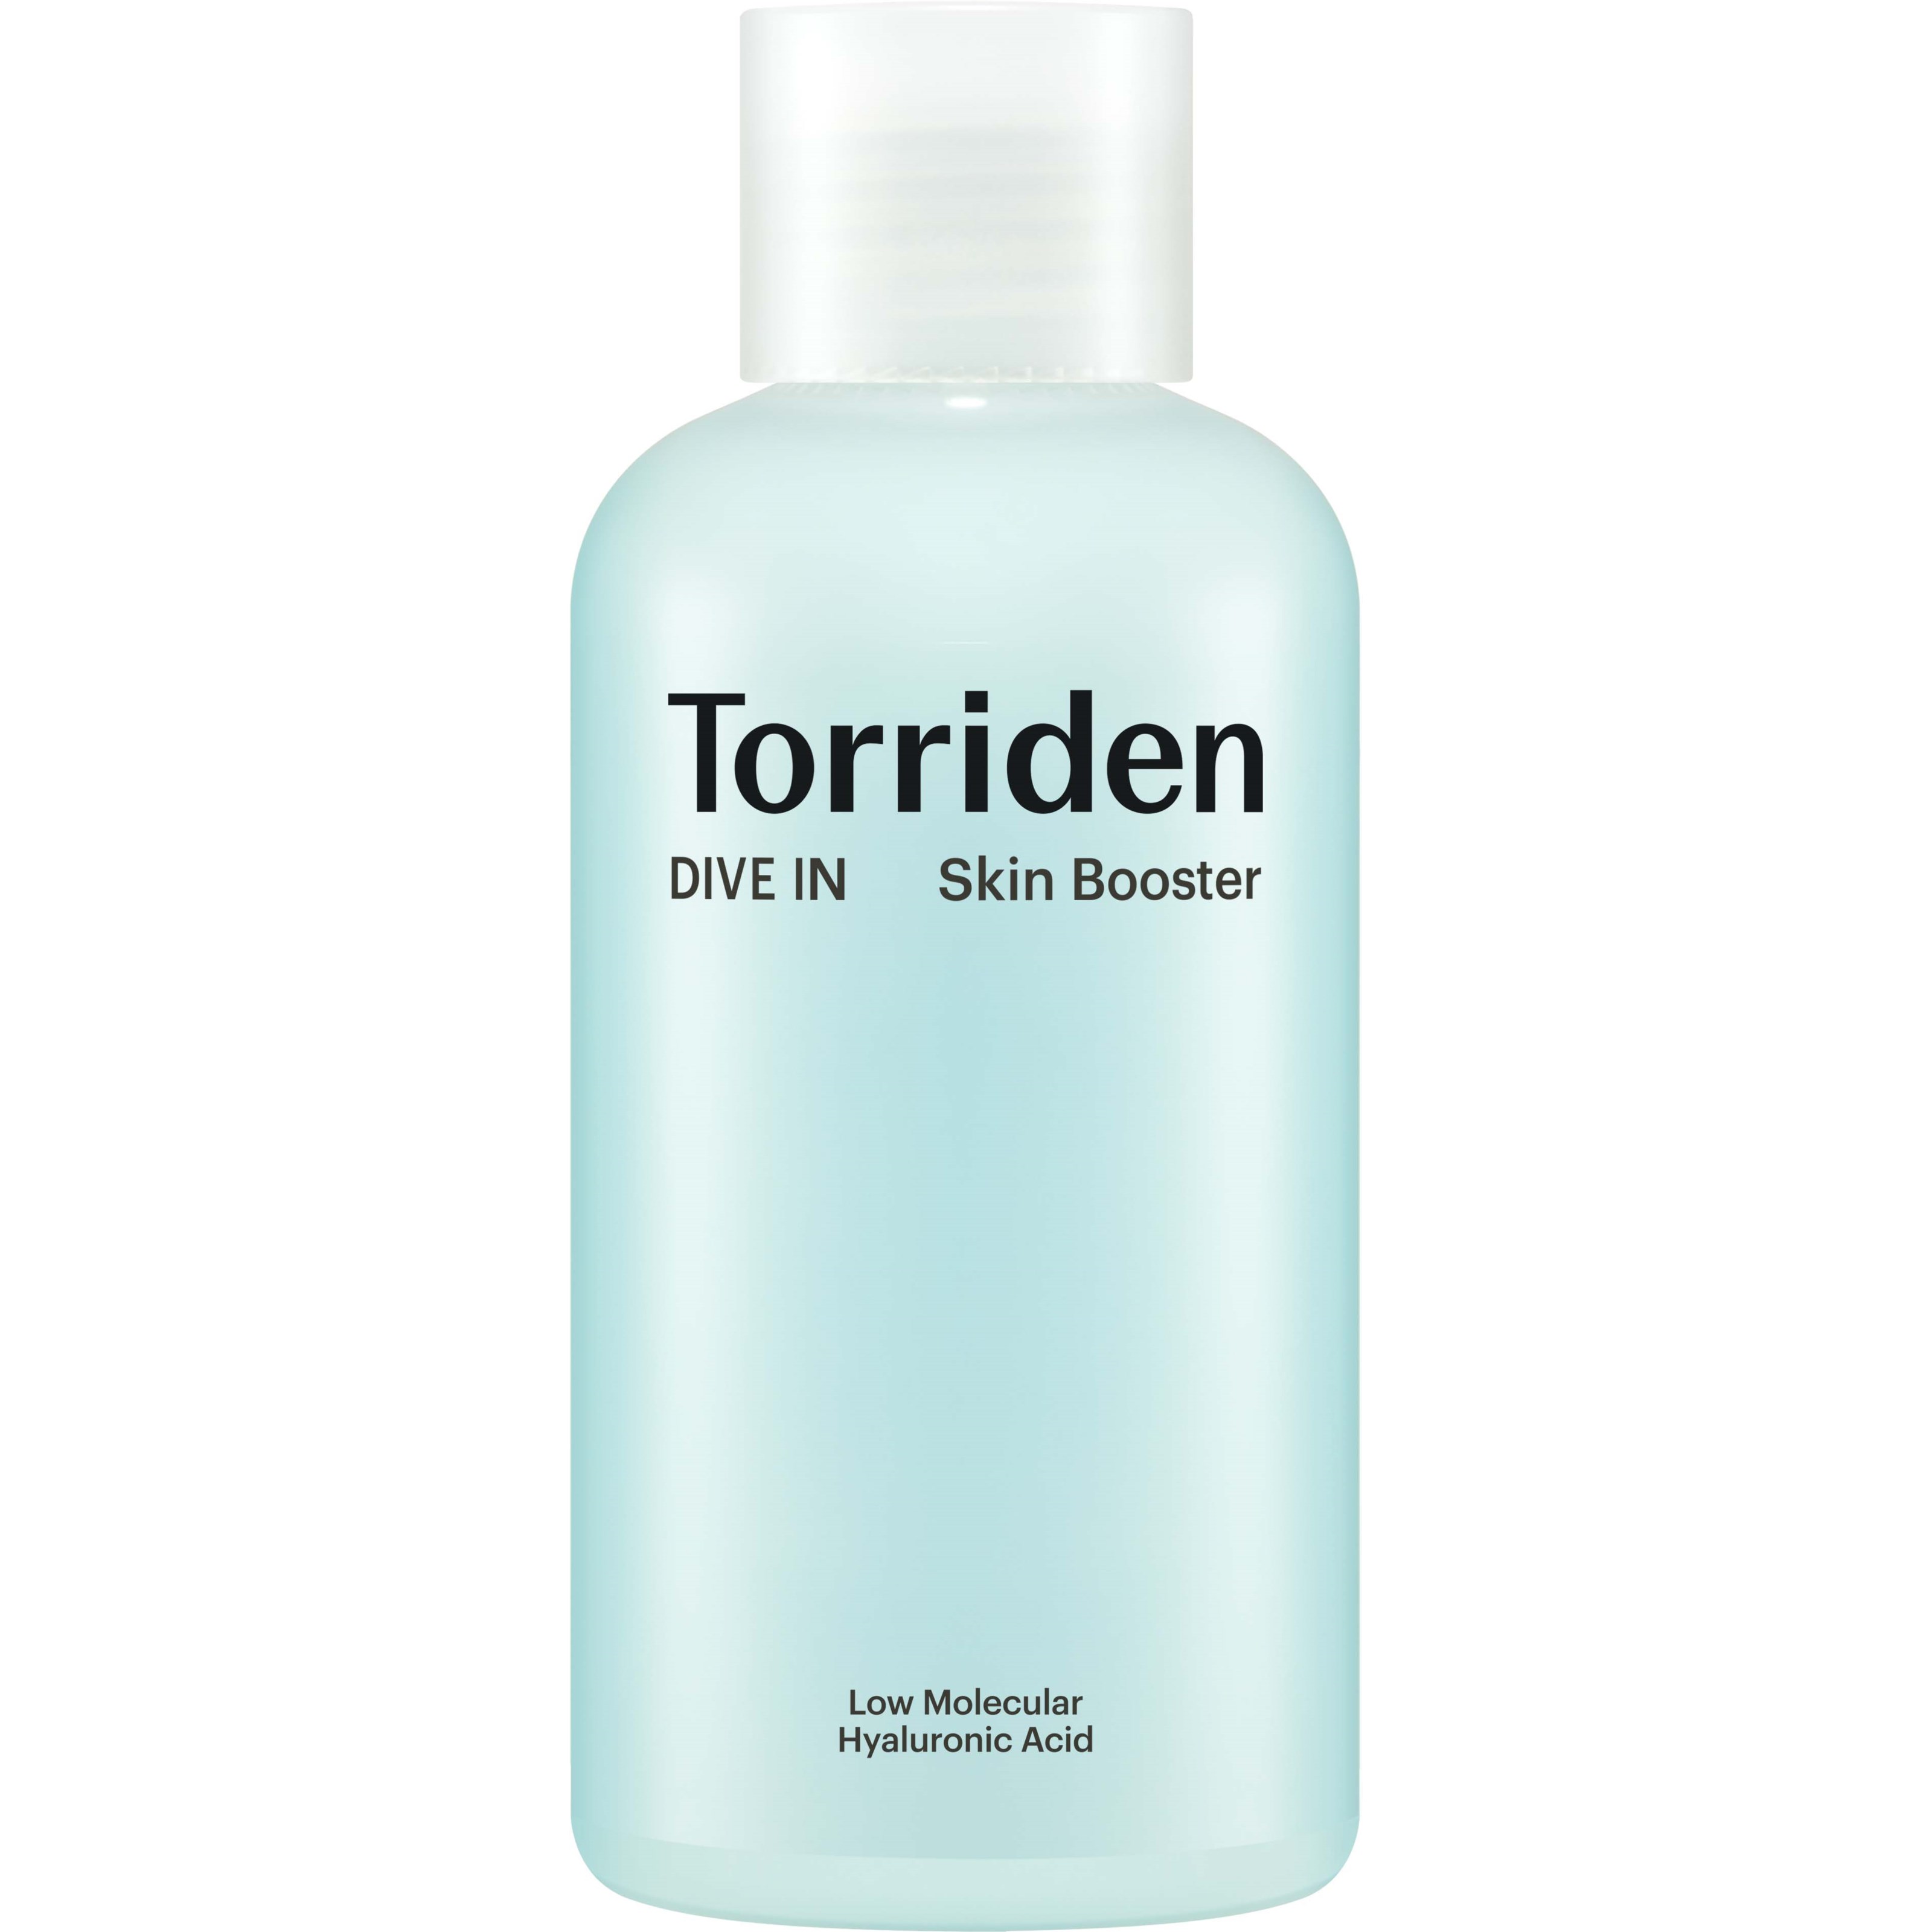 Torriden DIVE IN Low Molecular Hyaluronic Acid Skin Booster 200 m